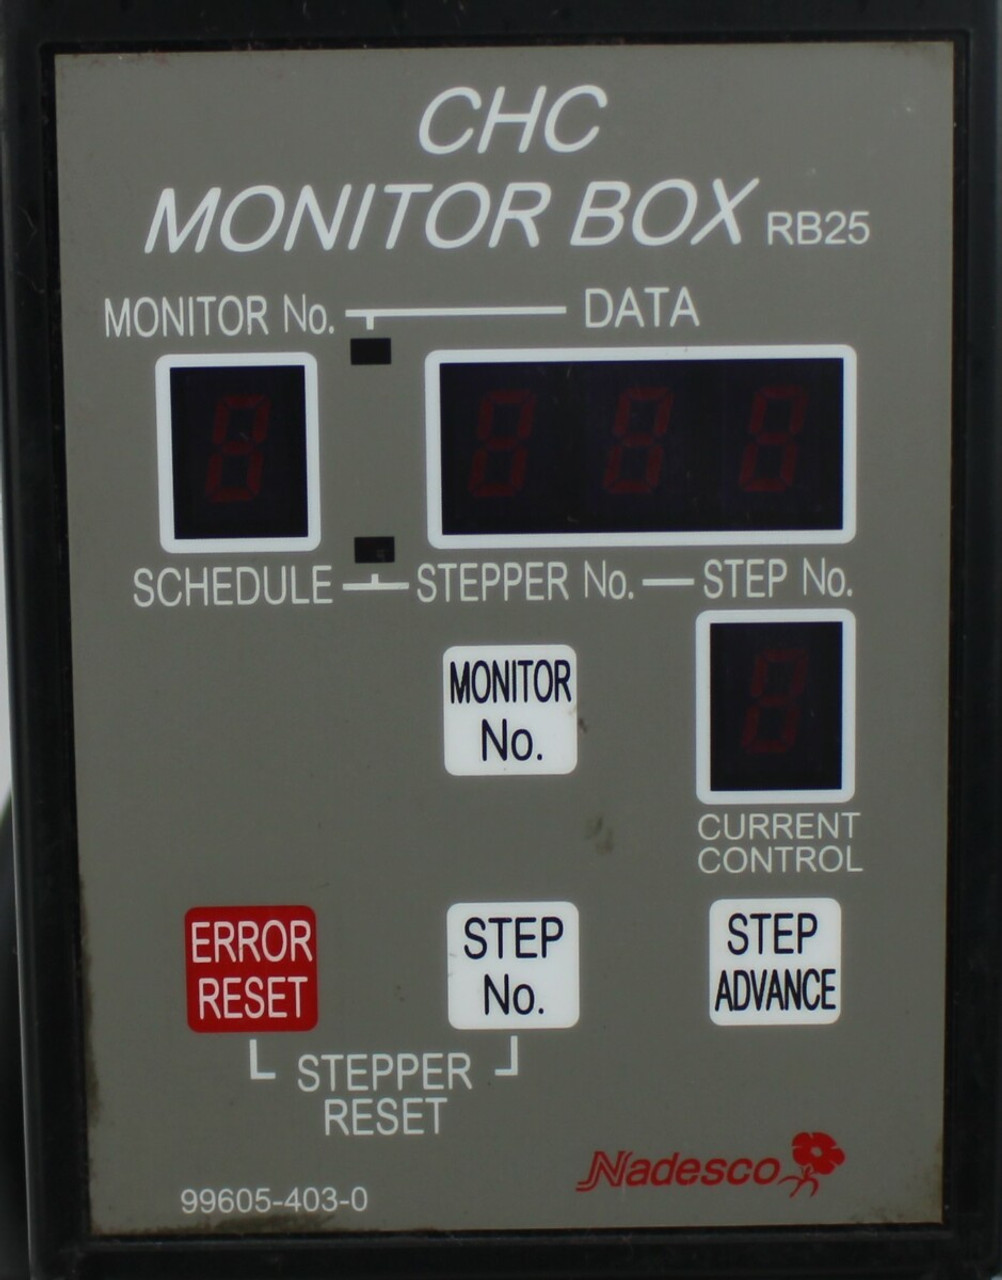 Nadesco RB25 CHC Monitor Box 99605-403-0